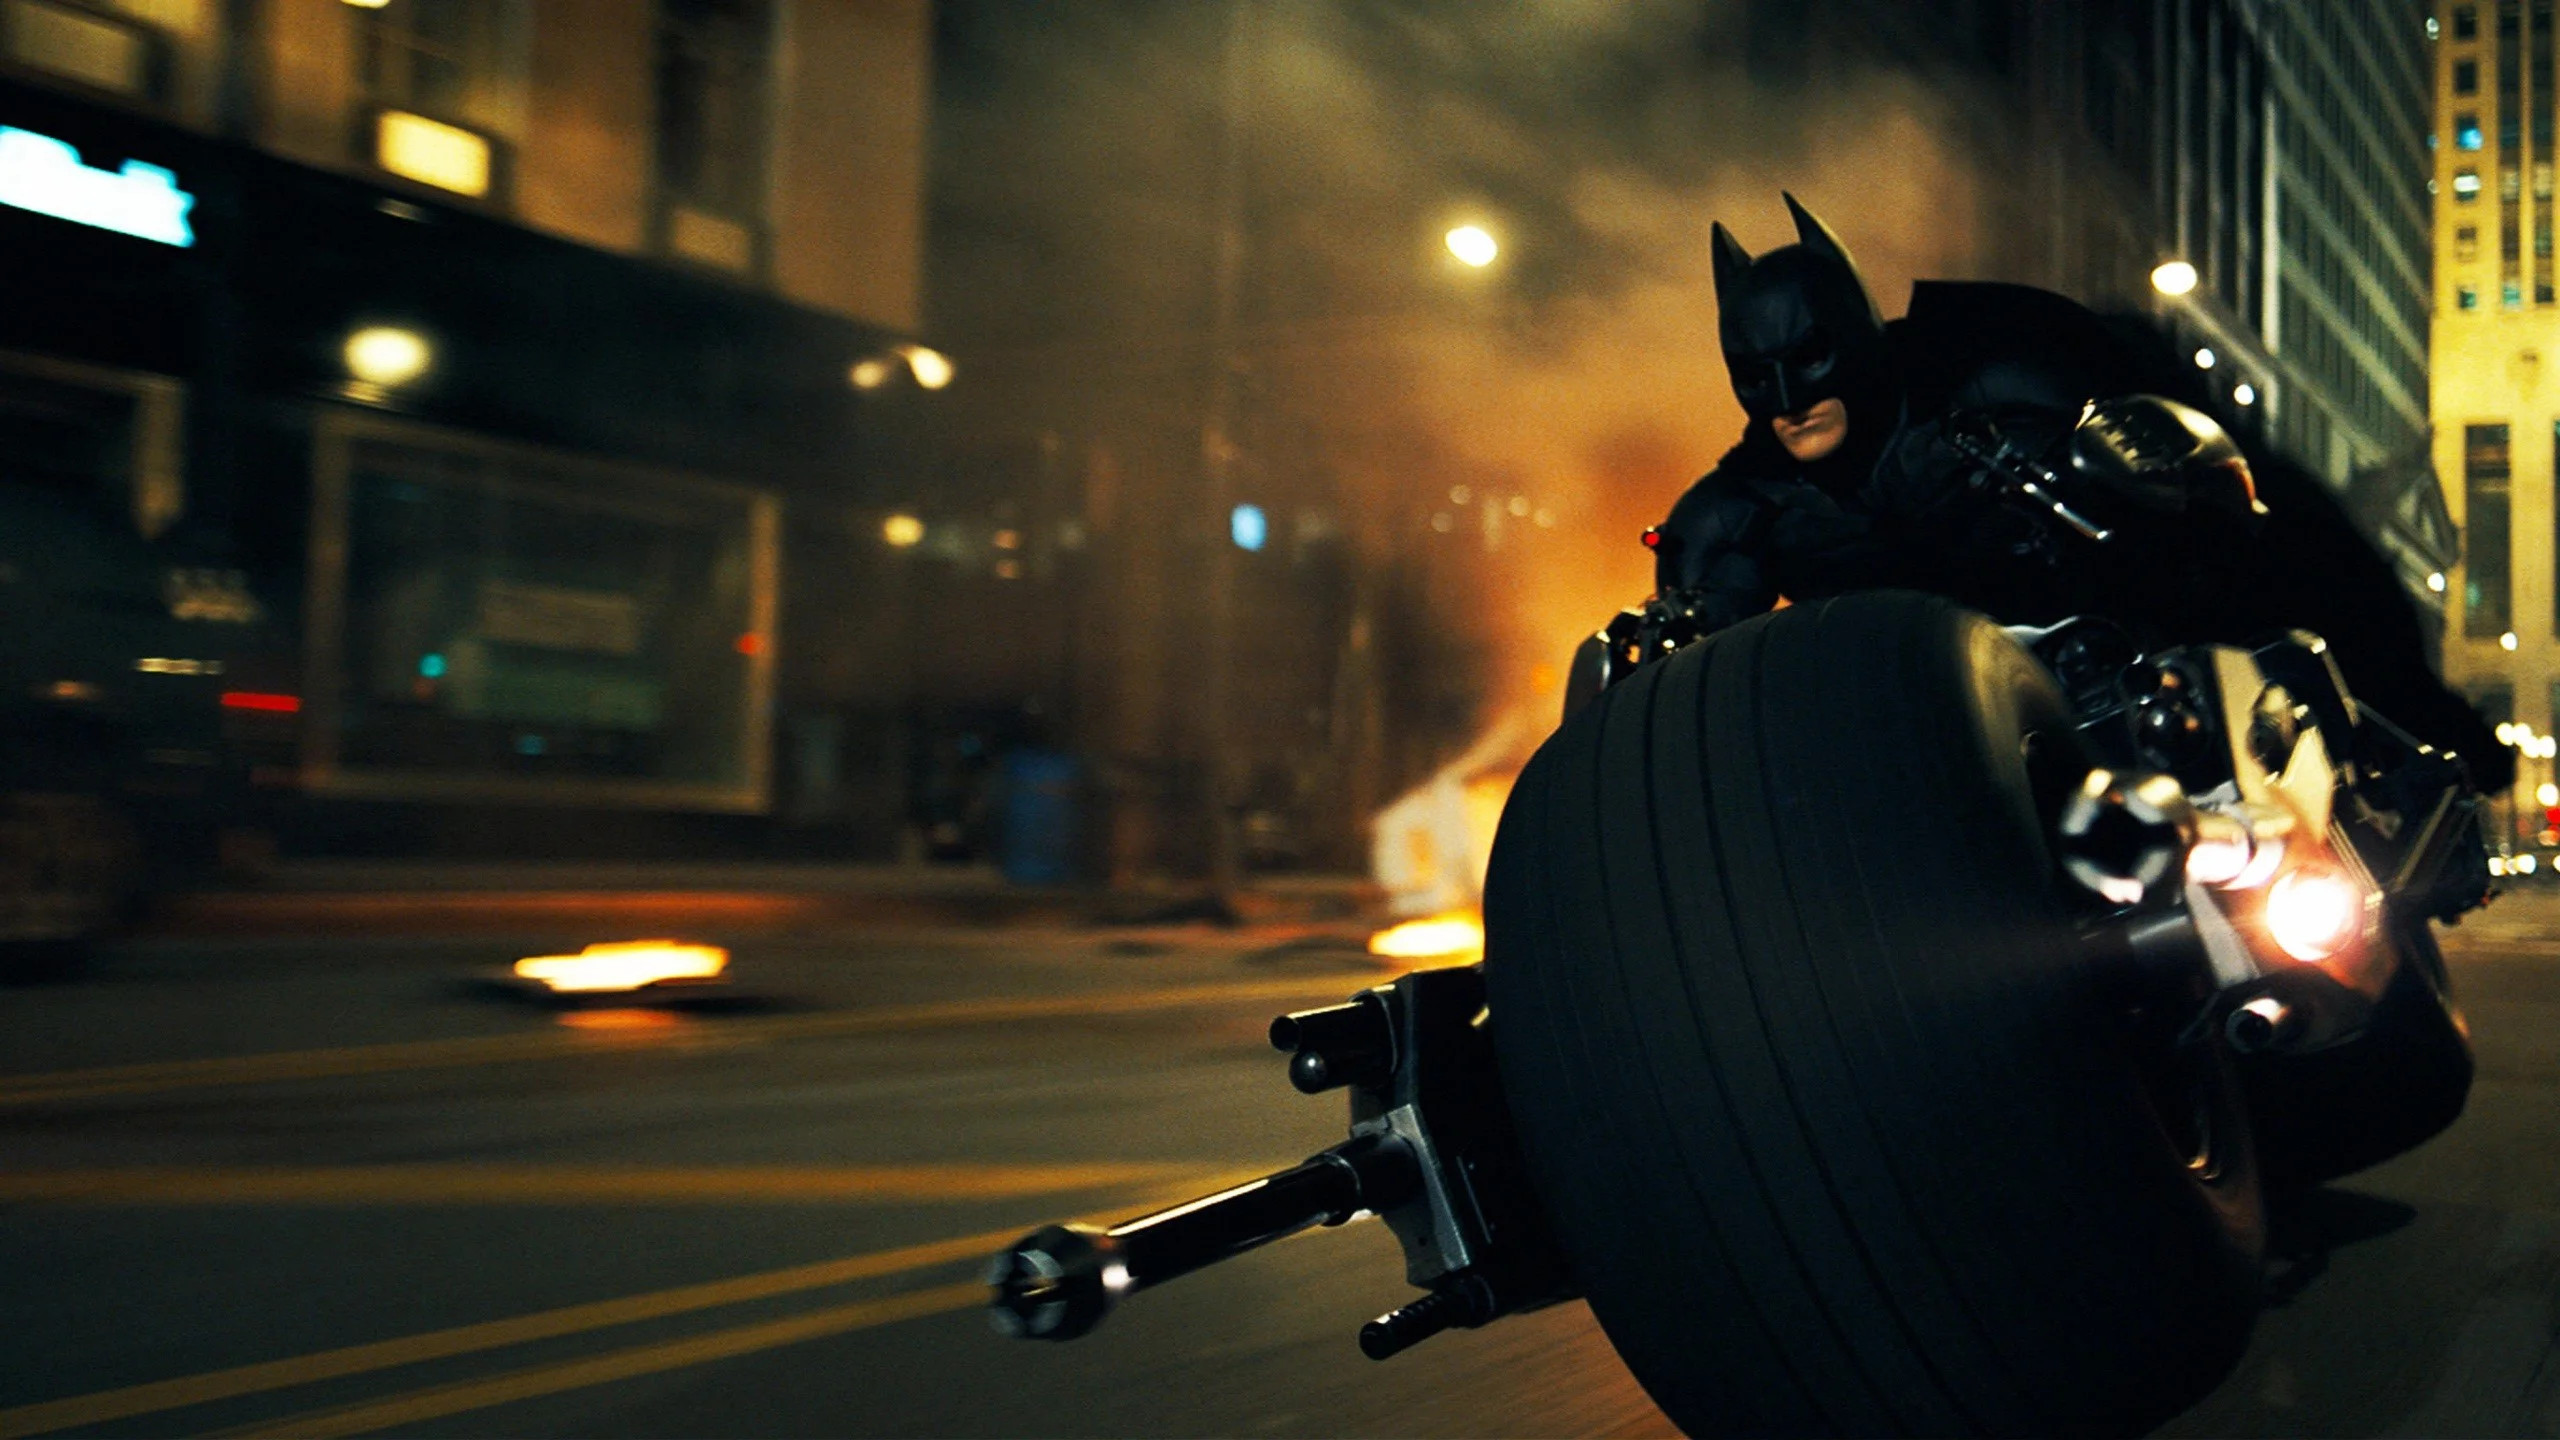 Batman The Dark Knight Rises 1080p HD Wallpaper for Desktop